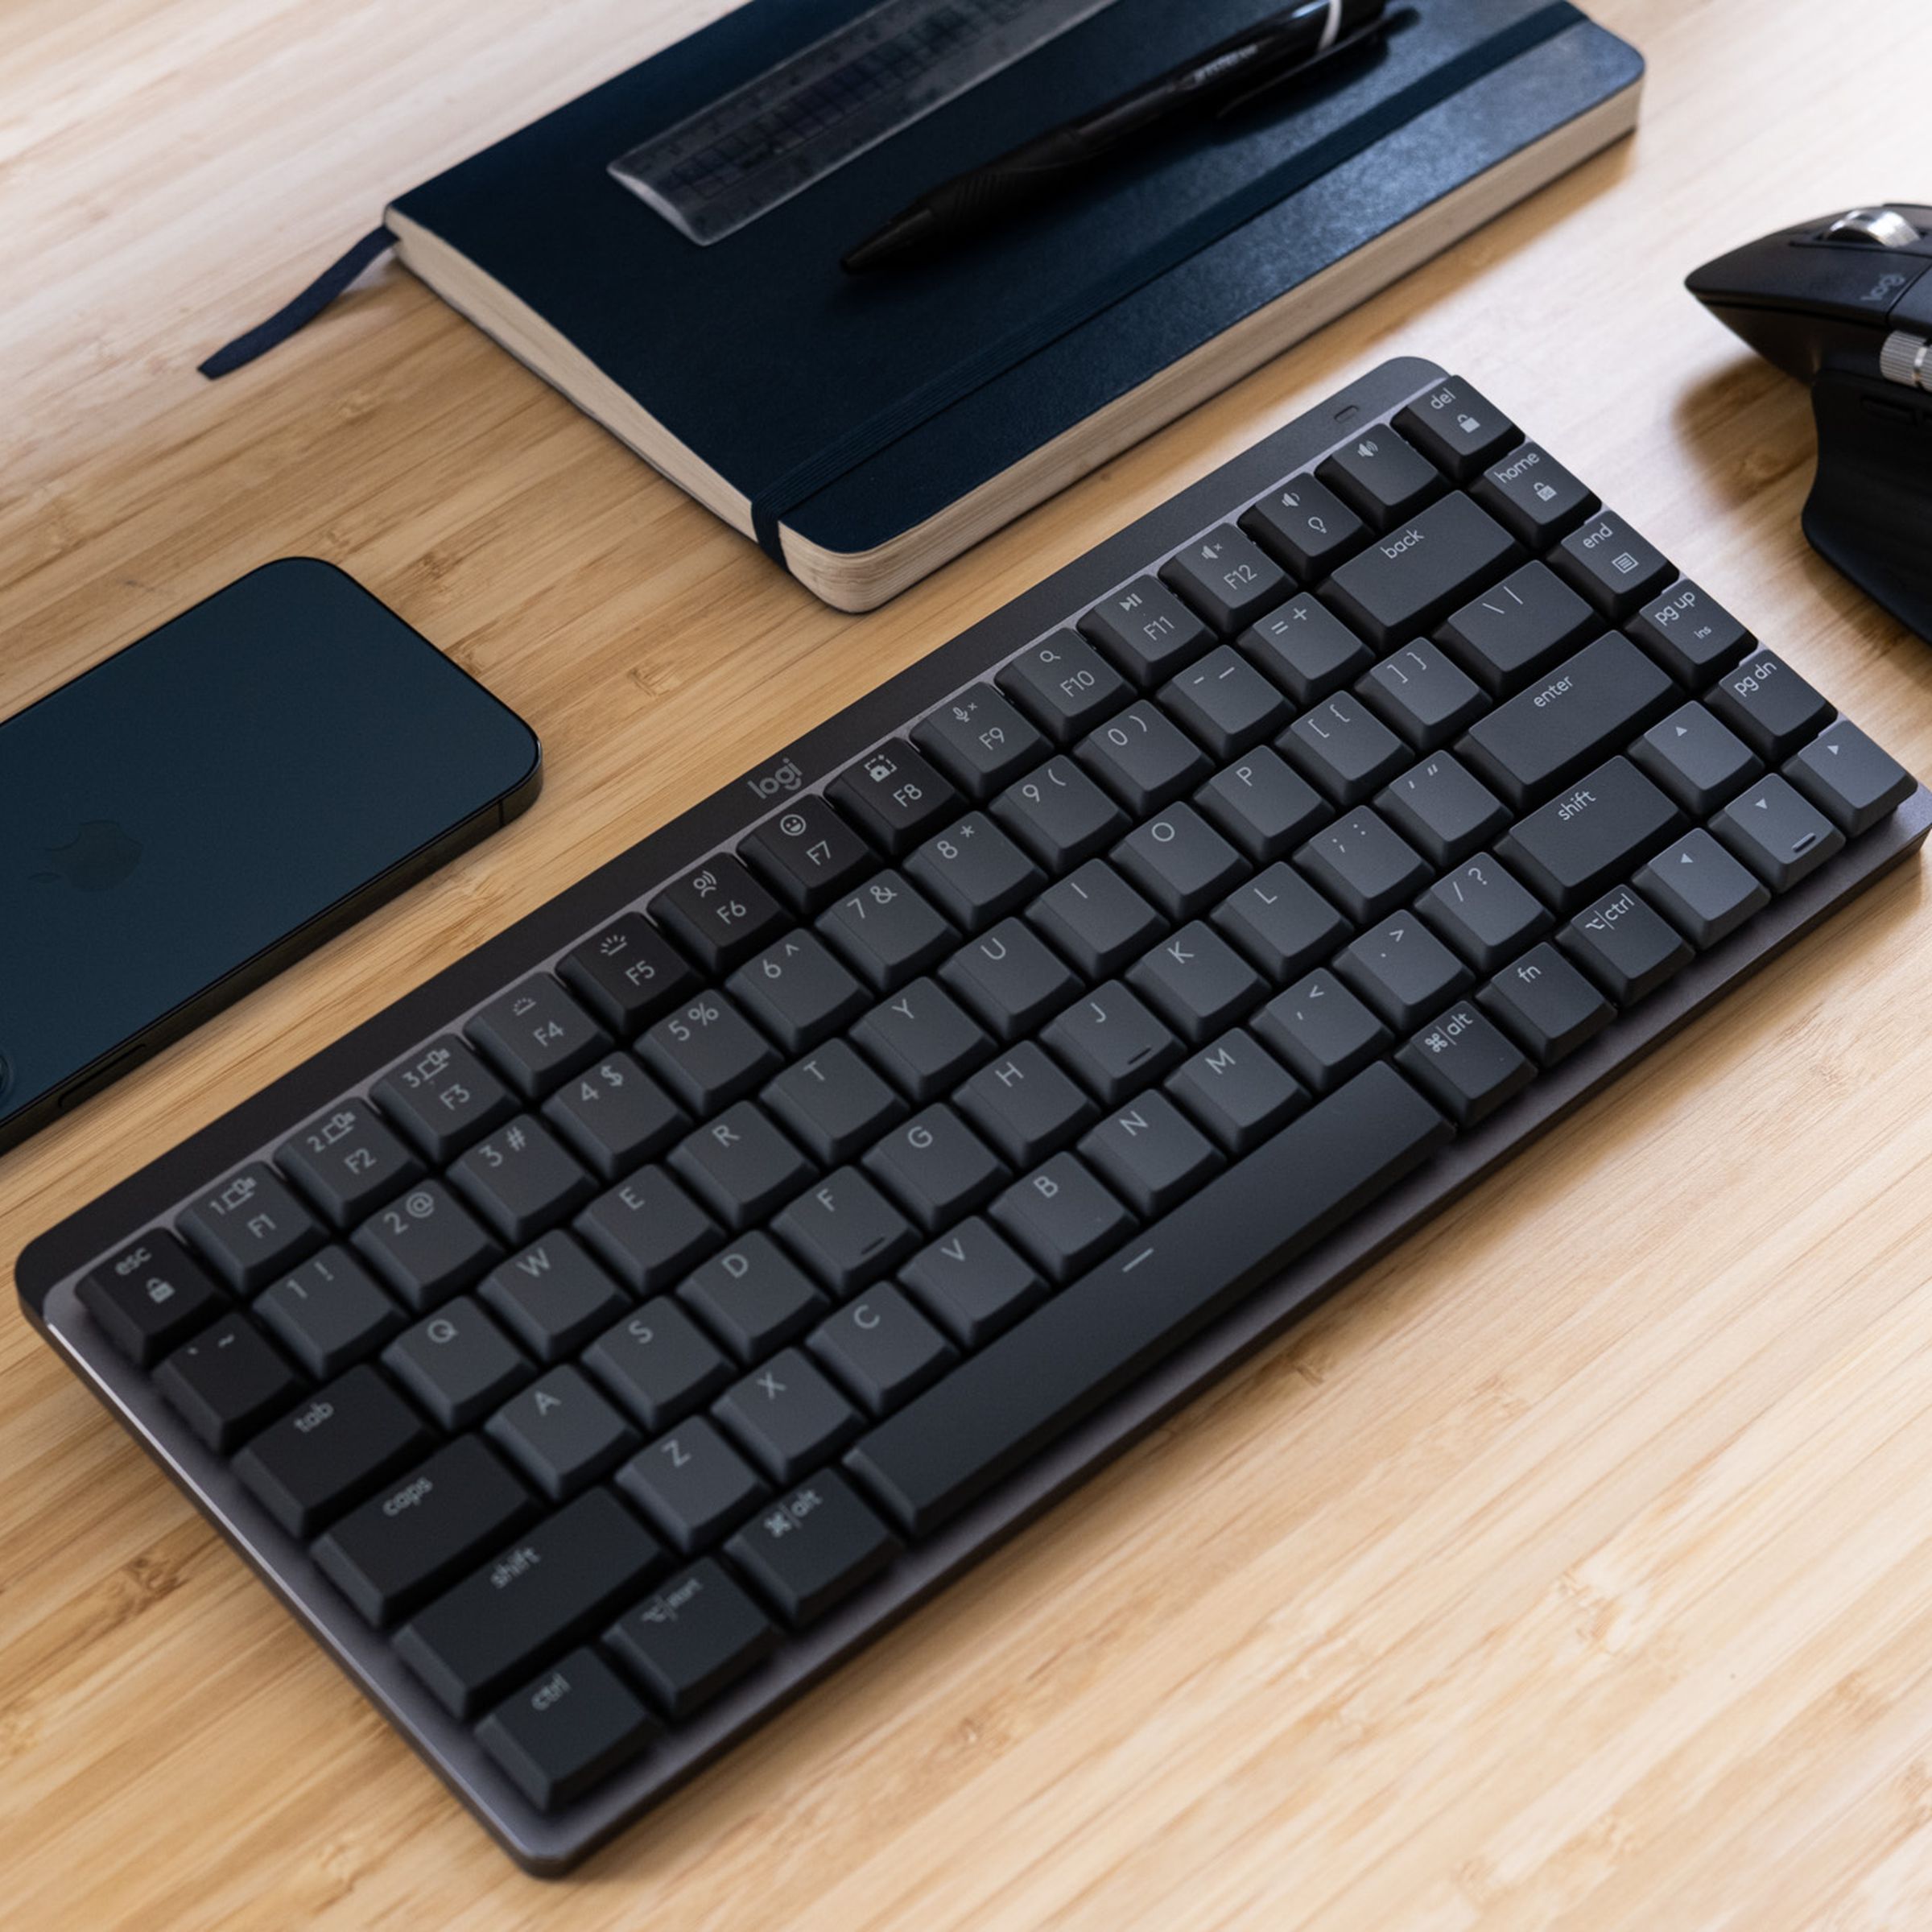 A Logitech MX Mechanical Mini keyboard on a wood desk, beside a mouse, phone, and notebook.